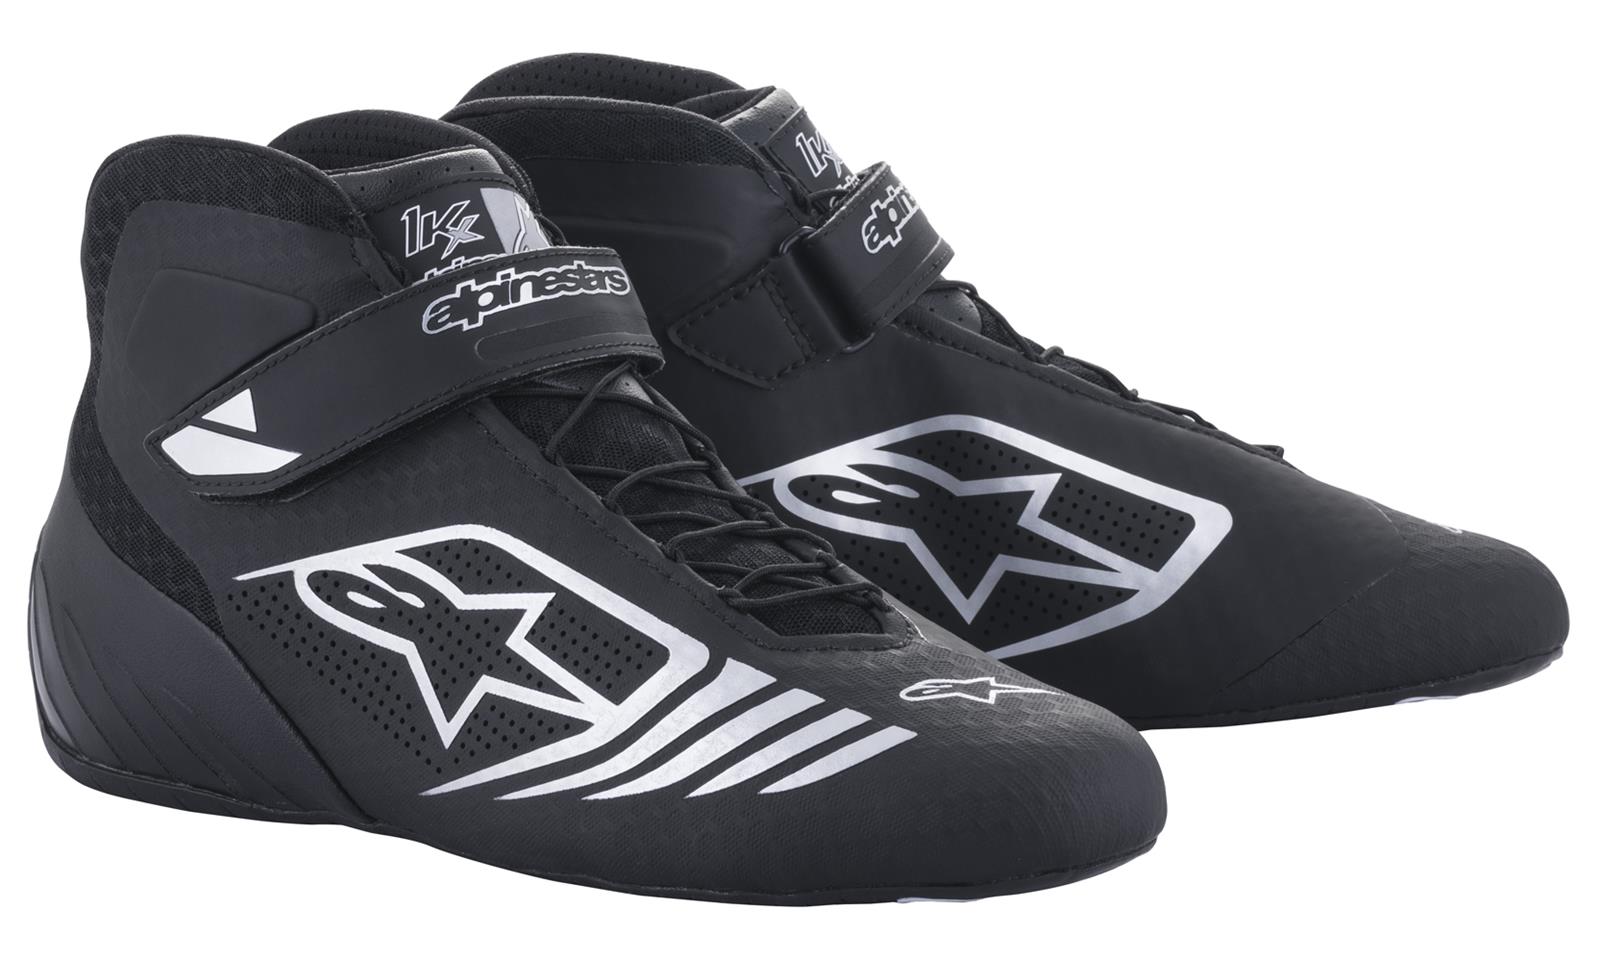 Alpinestars TECH-1 KX ботинки для картинга, черный/серебристый, р-р 36(EUR)/4.5(US)/3.5(UK). DARK-STOCK.RU